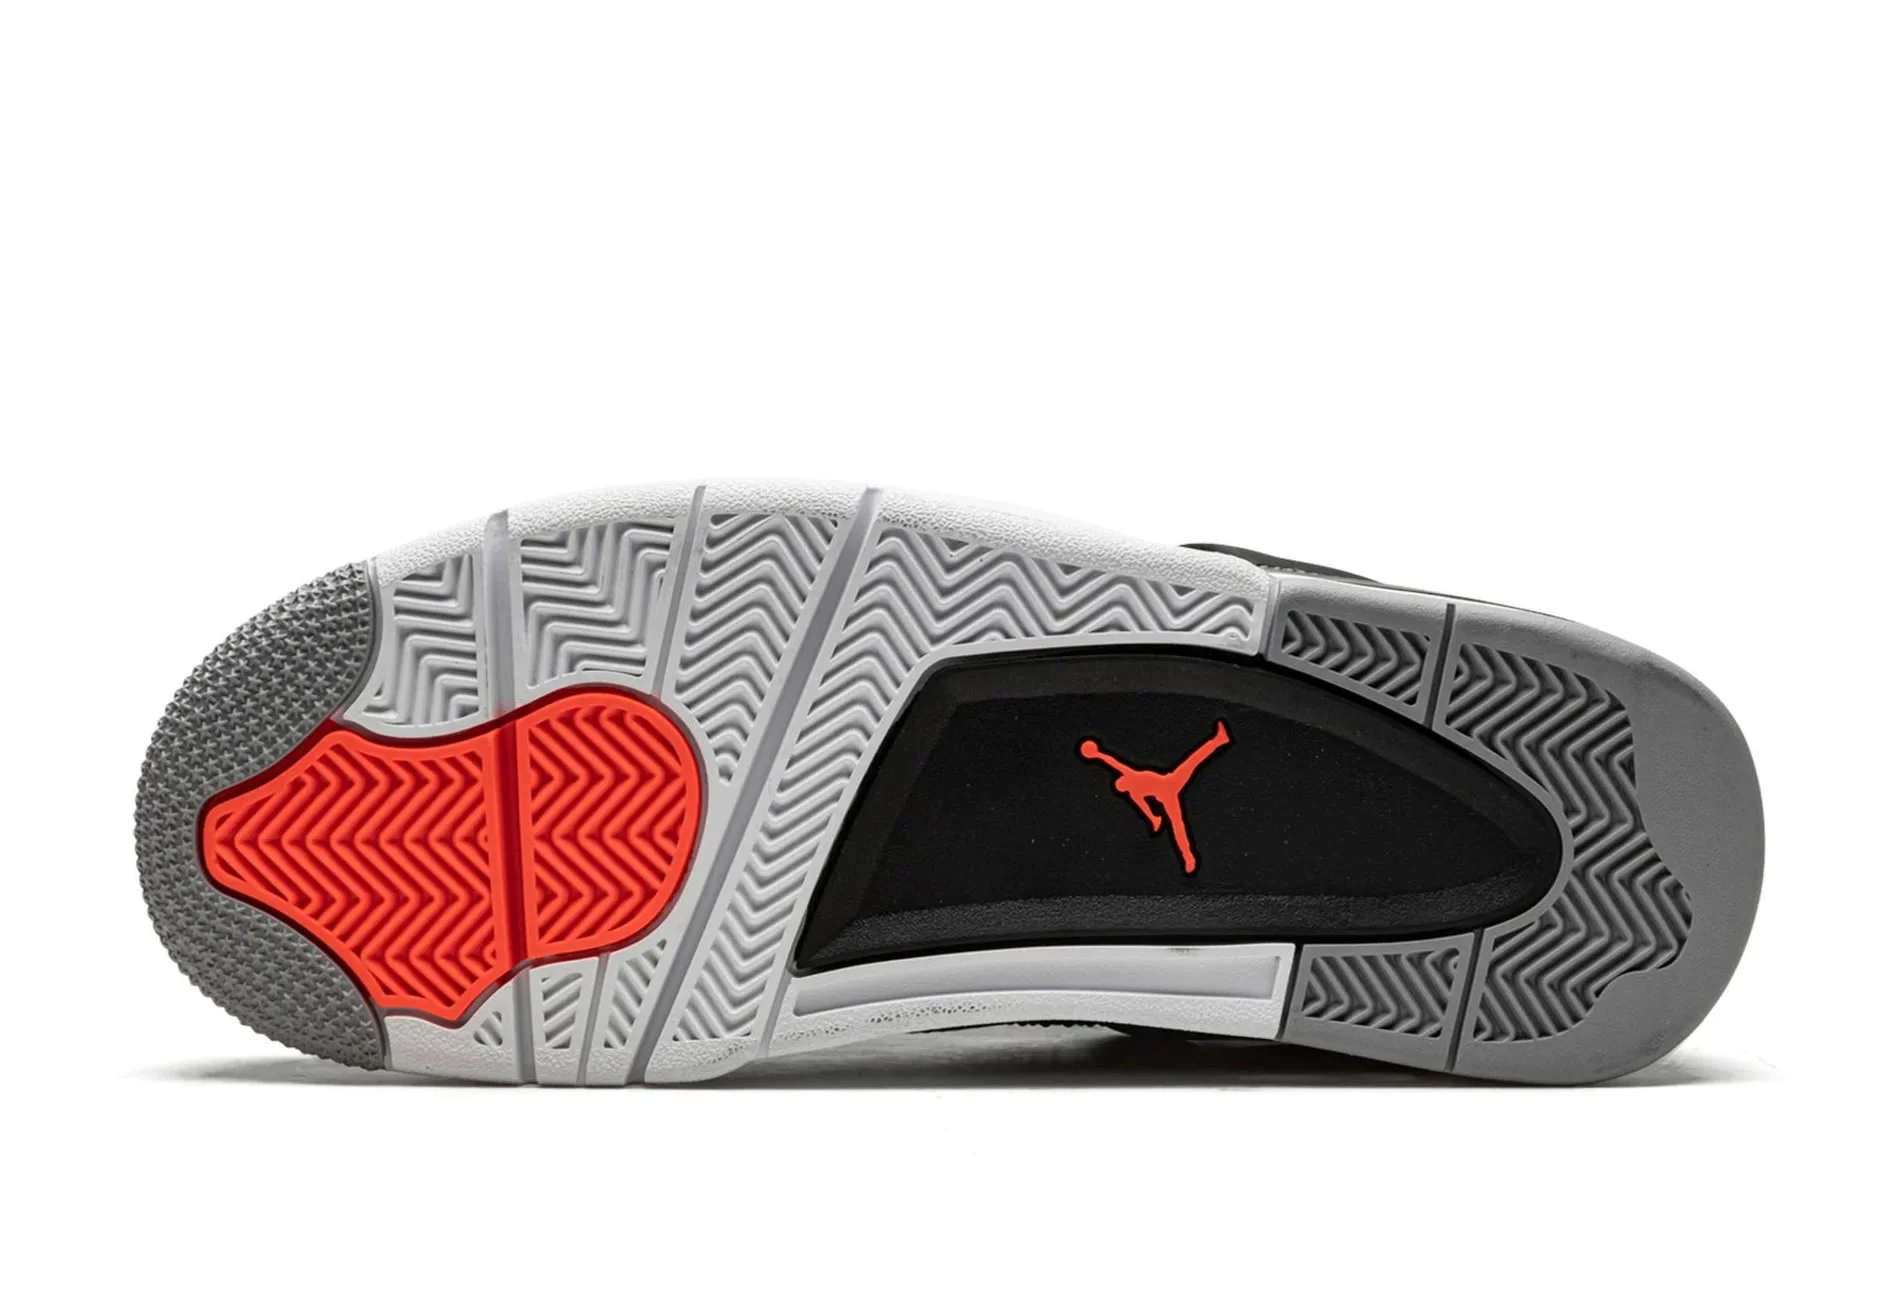 Air Jordan 4 Retro Infrared Dh6927 061 Ljr Batch Sneakers (5) - www.ljrofficial.com